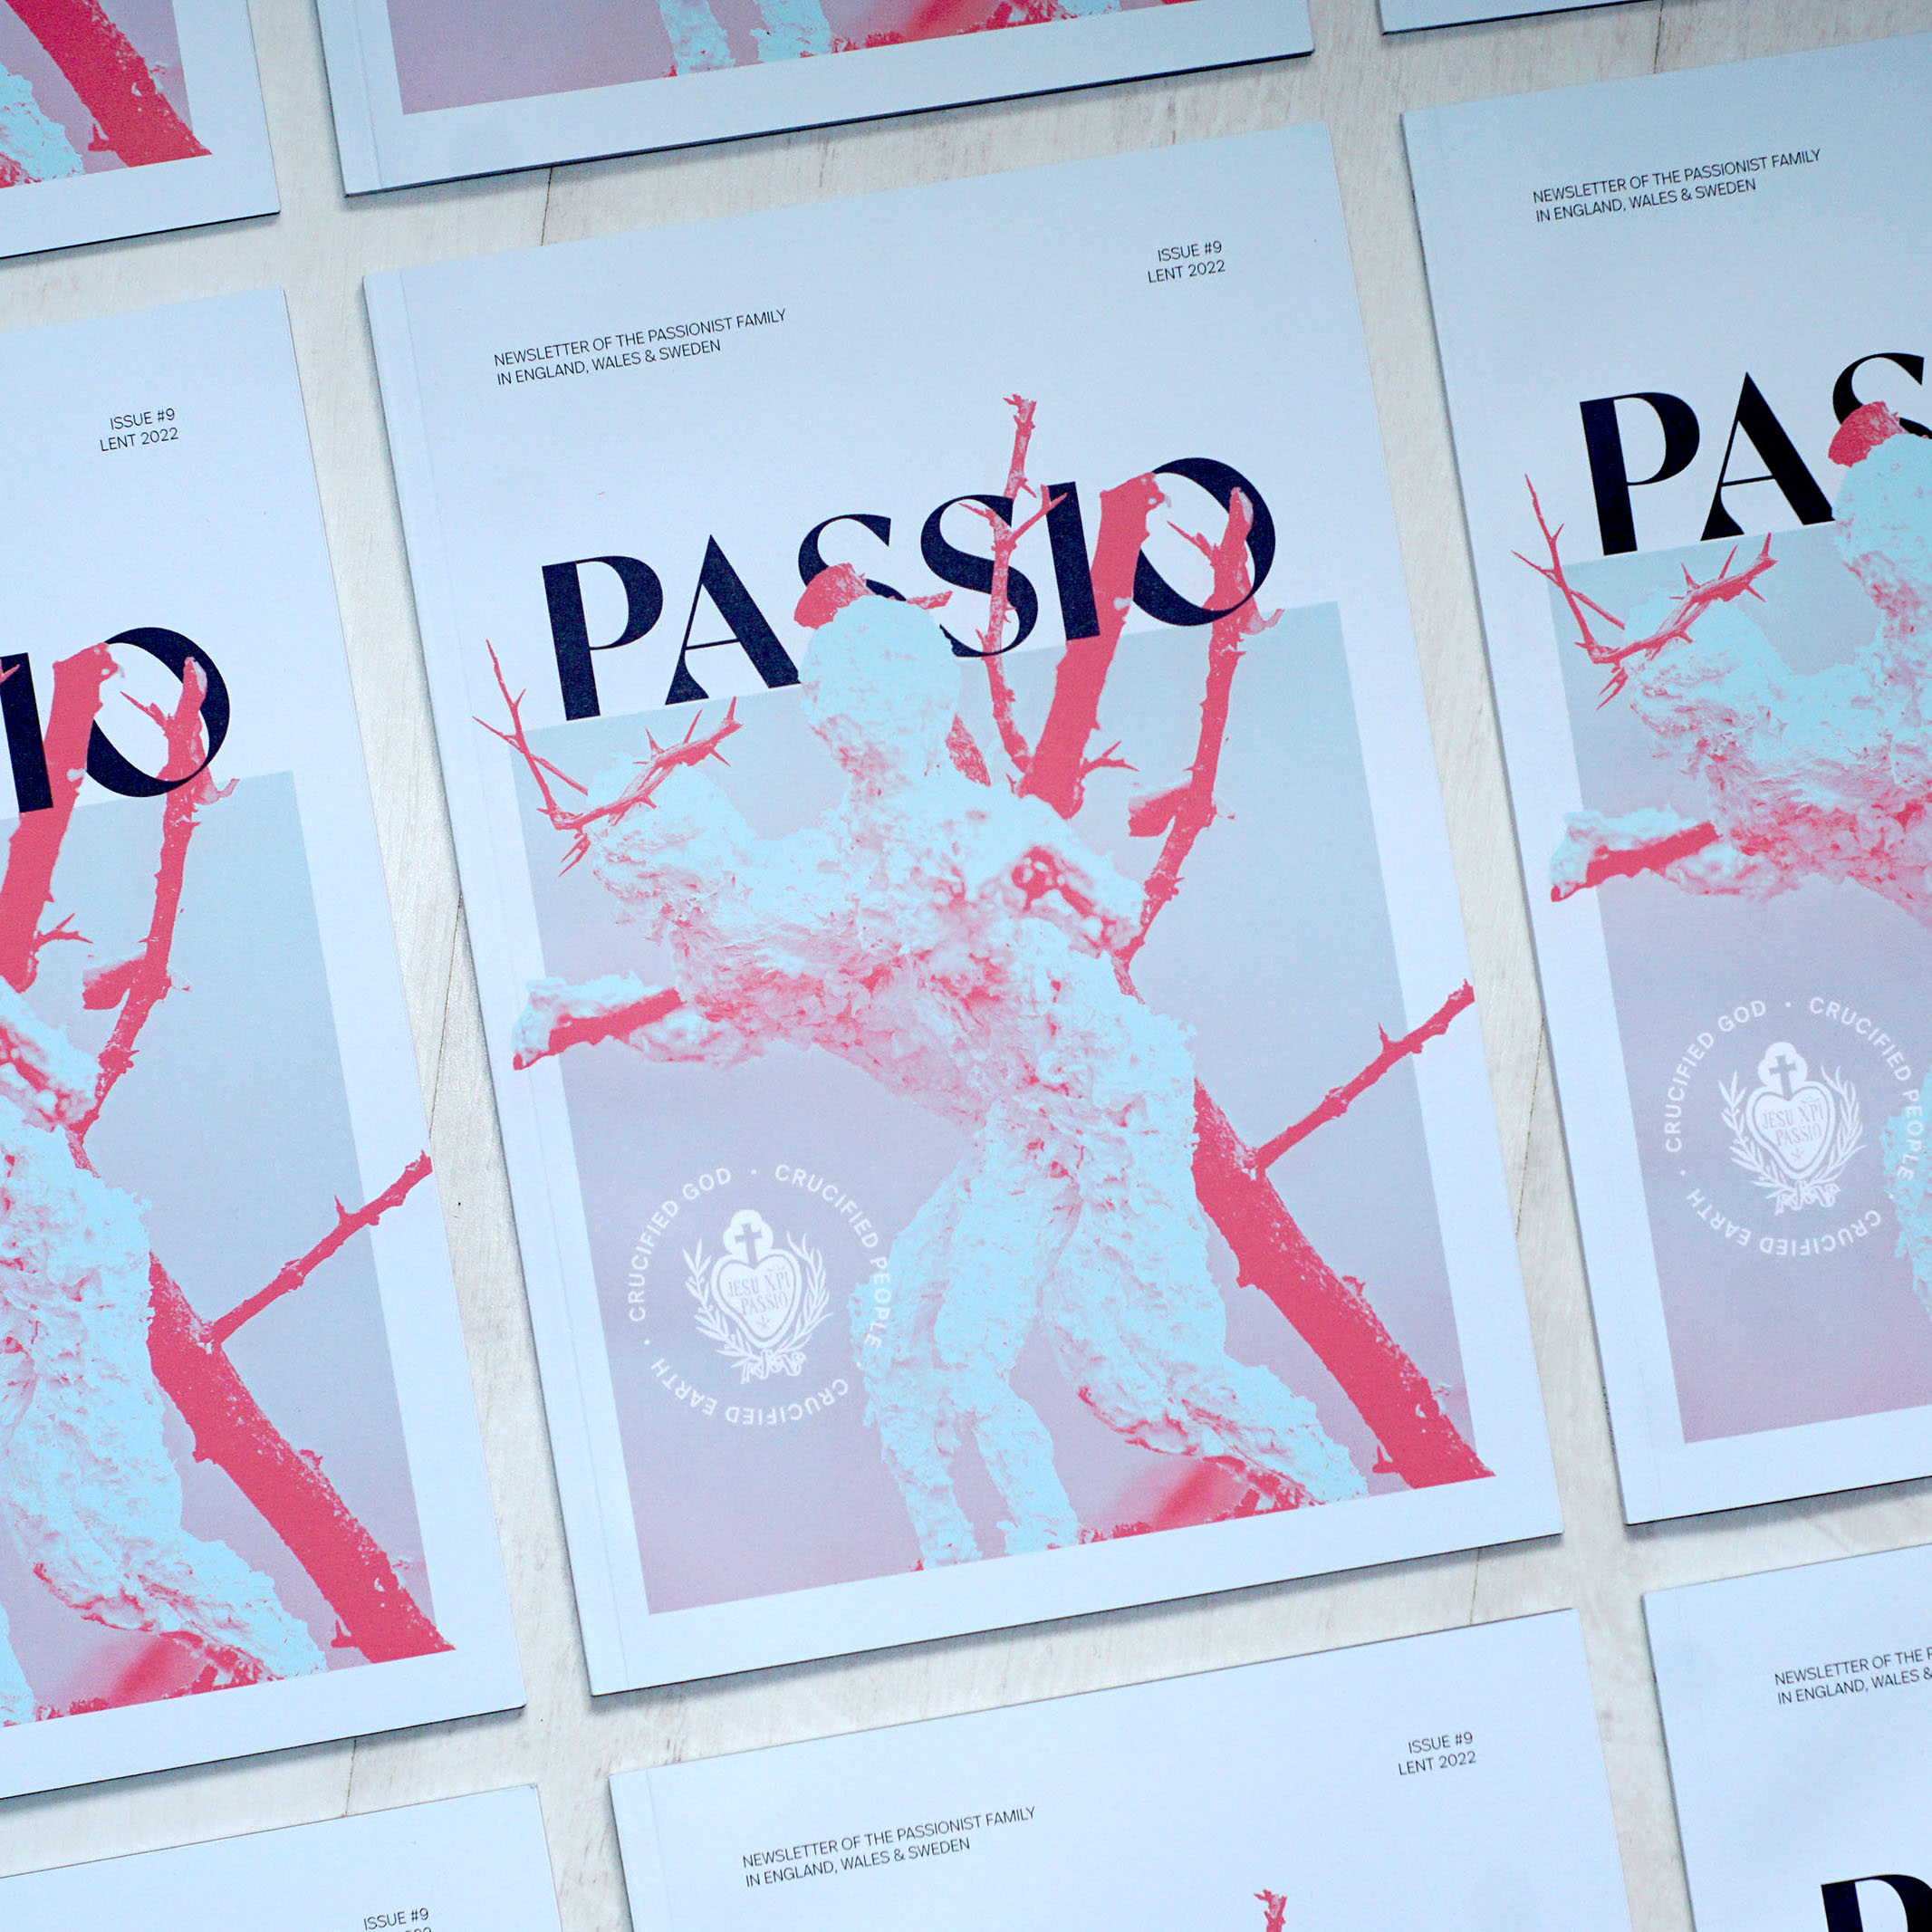 Passionists UK Passio Magazine — Issue #9